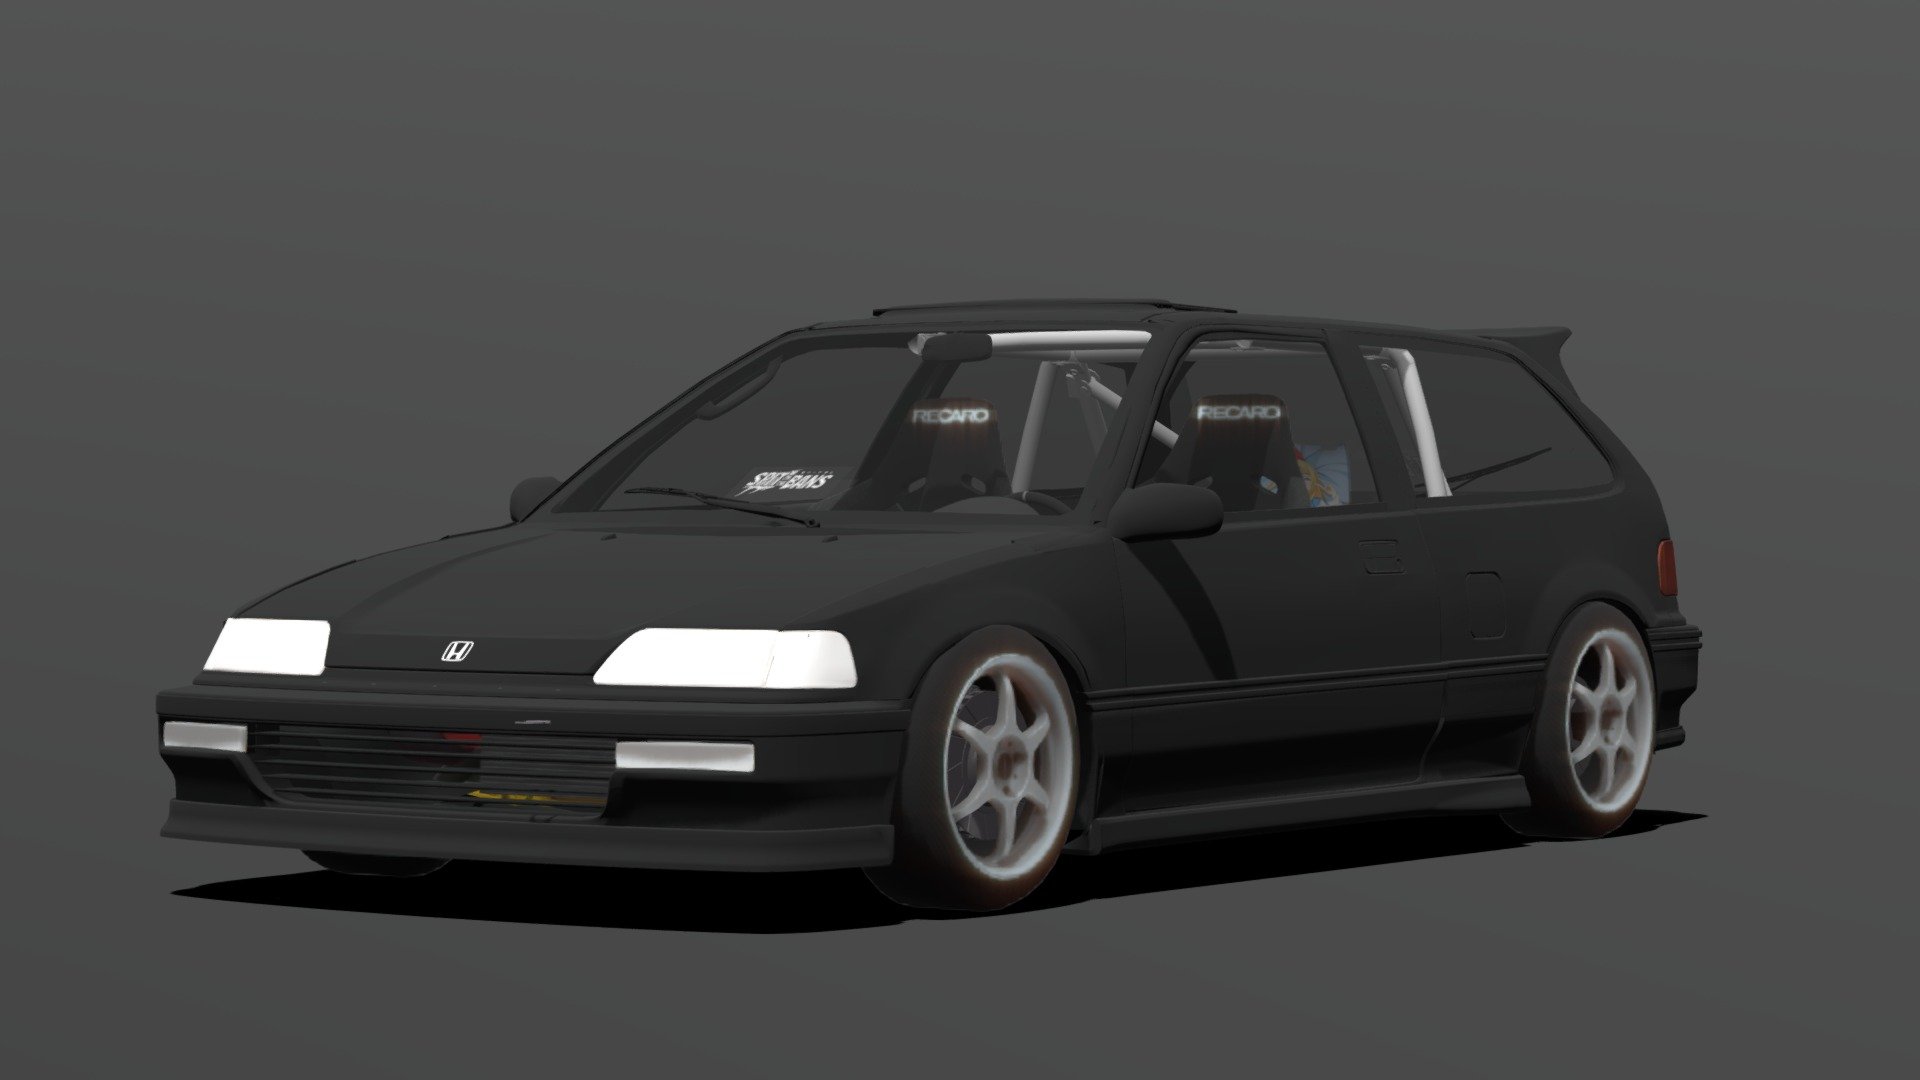 The 4th generation of civic - 1984 Honda Civic Si 4th generation 禁止に唾を吐く - 3D model by No Name (@s2newton.09) 3d model